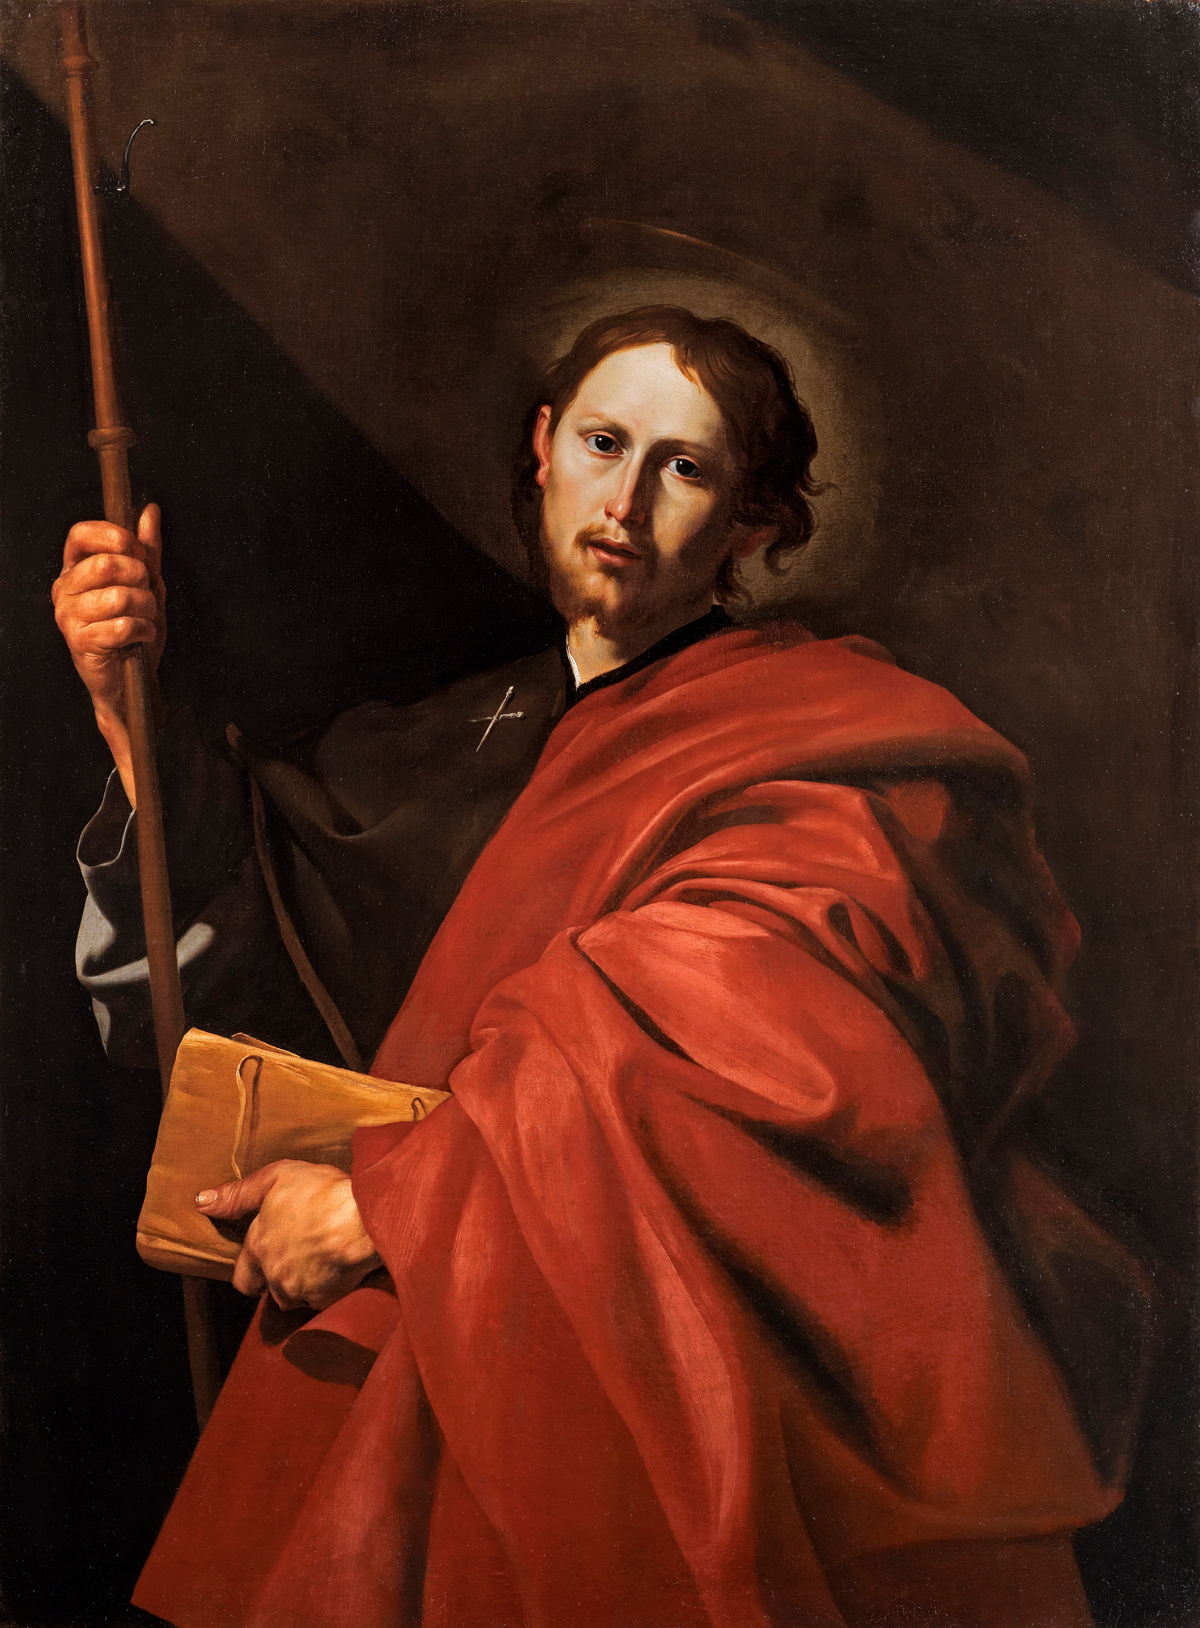 Saint James the Greater (1615-1616, Spain) by Jusepe de Ribera - Public Domain Catholic Painting